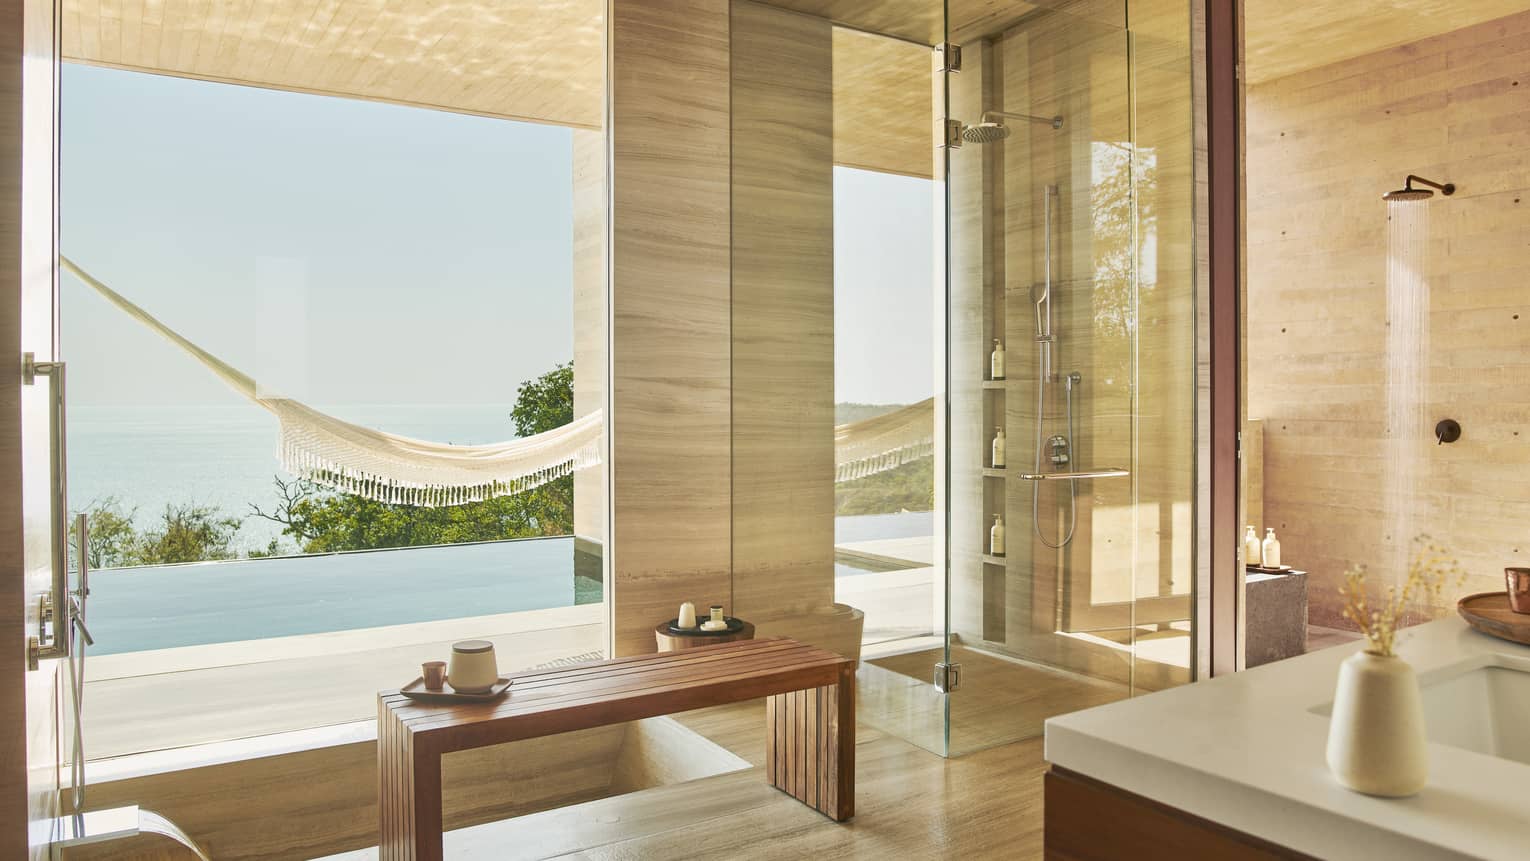 Indoor-outdoor, modern bathroom with infinity pool and ocean view